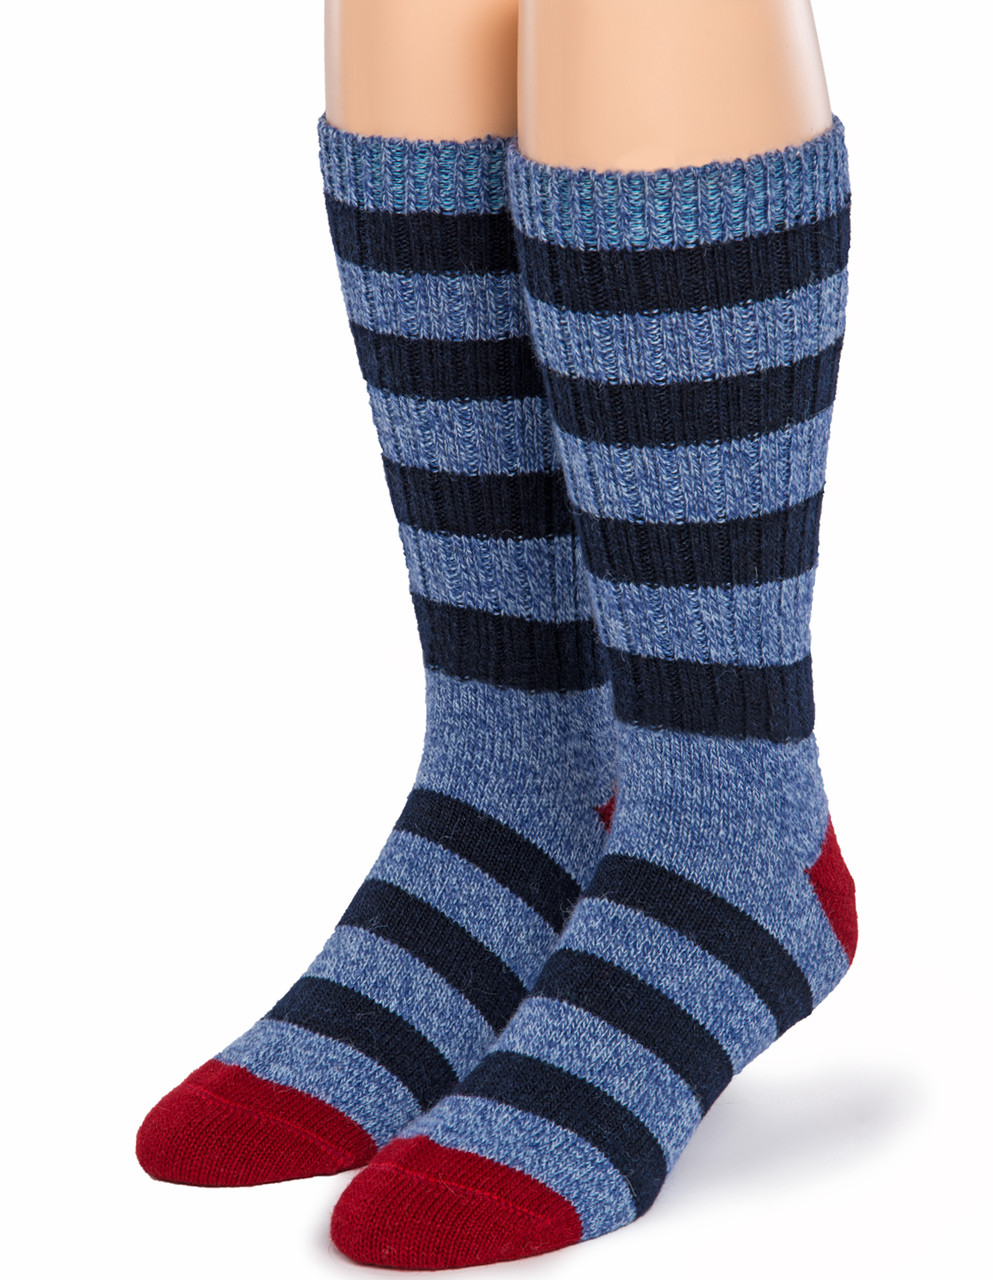 Old School Vintage Striped Socks, Size Medium | 100% Alpaca Wool | Warrior Alpaca Socks